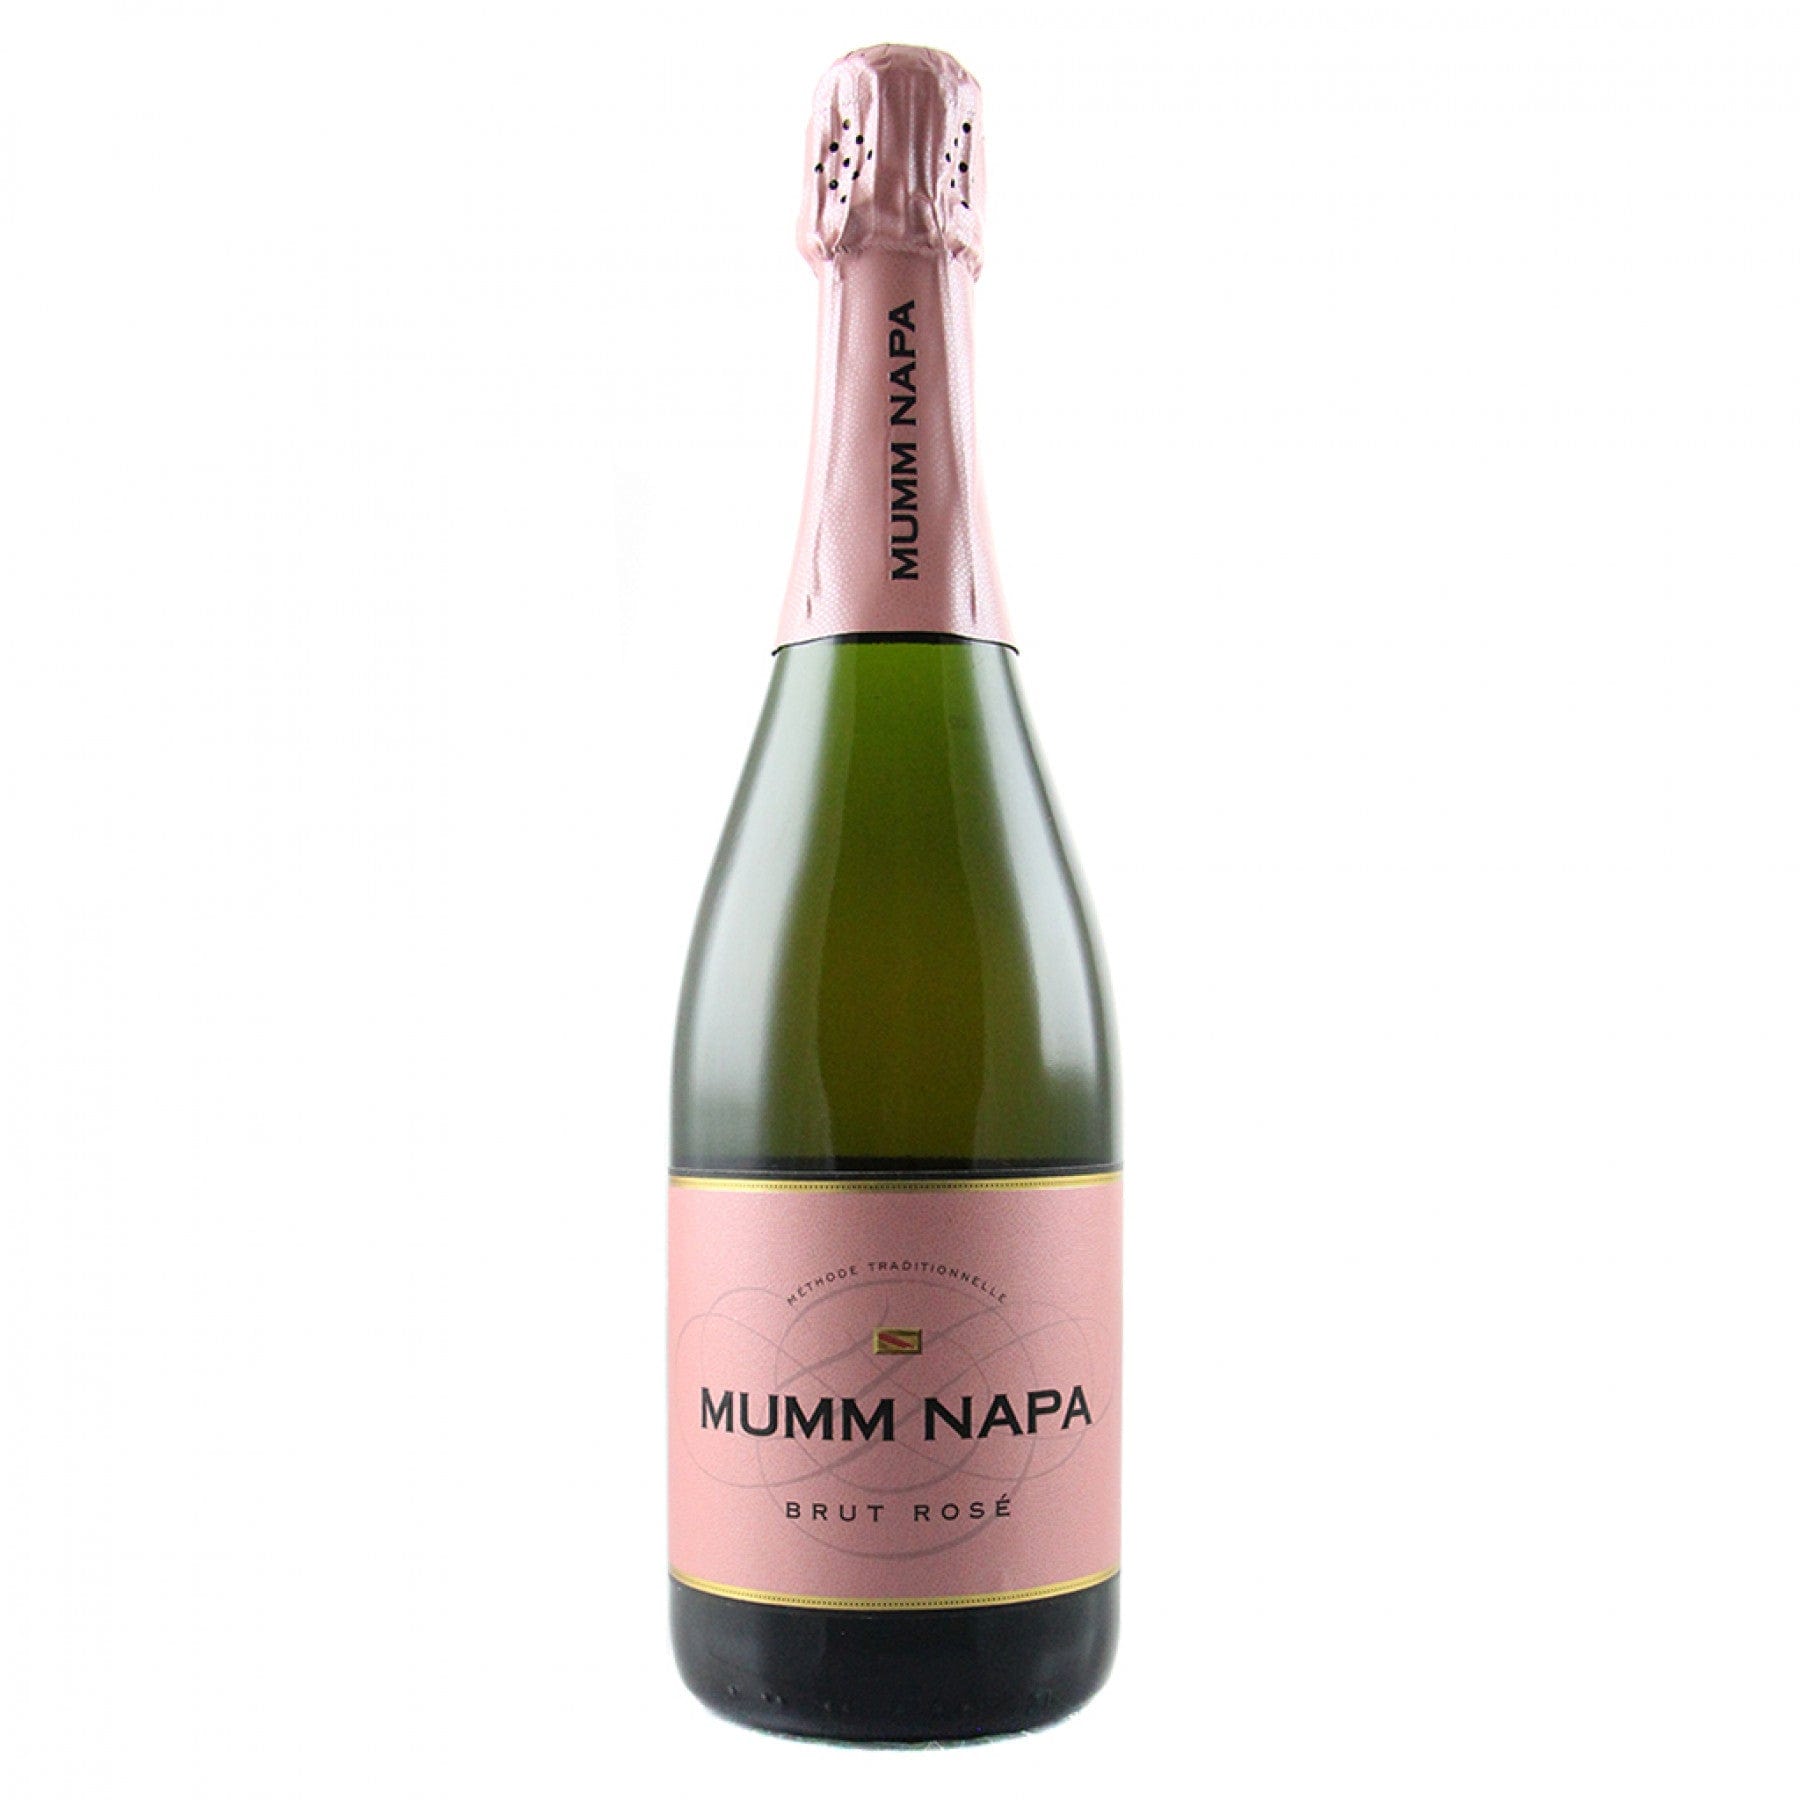 Mumm Sparkling Wine Brut Prestige - 750ml Bottle